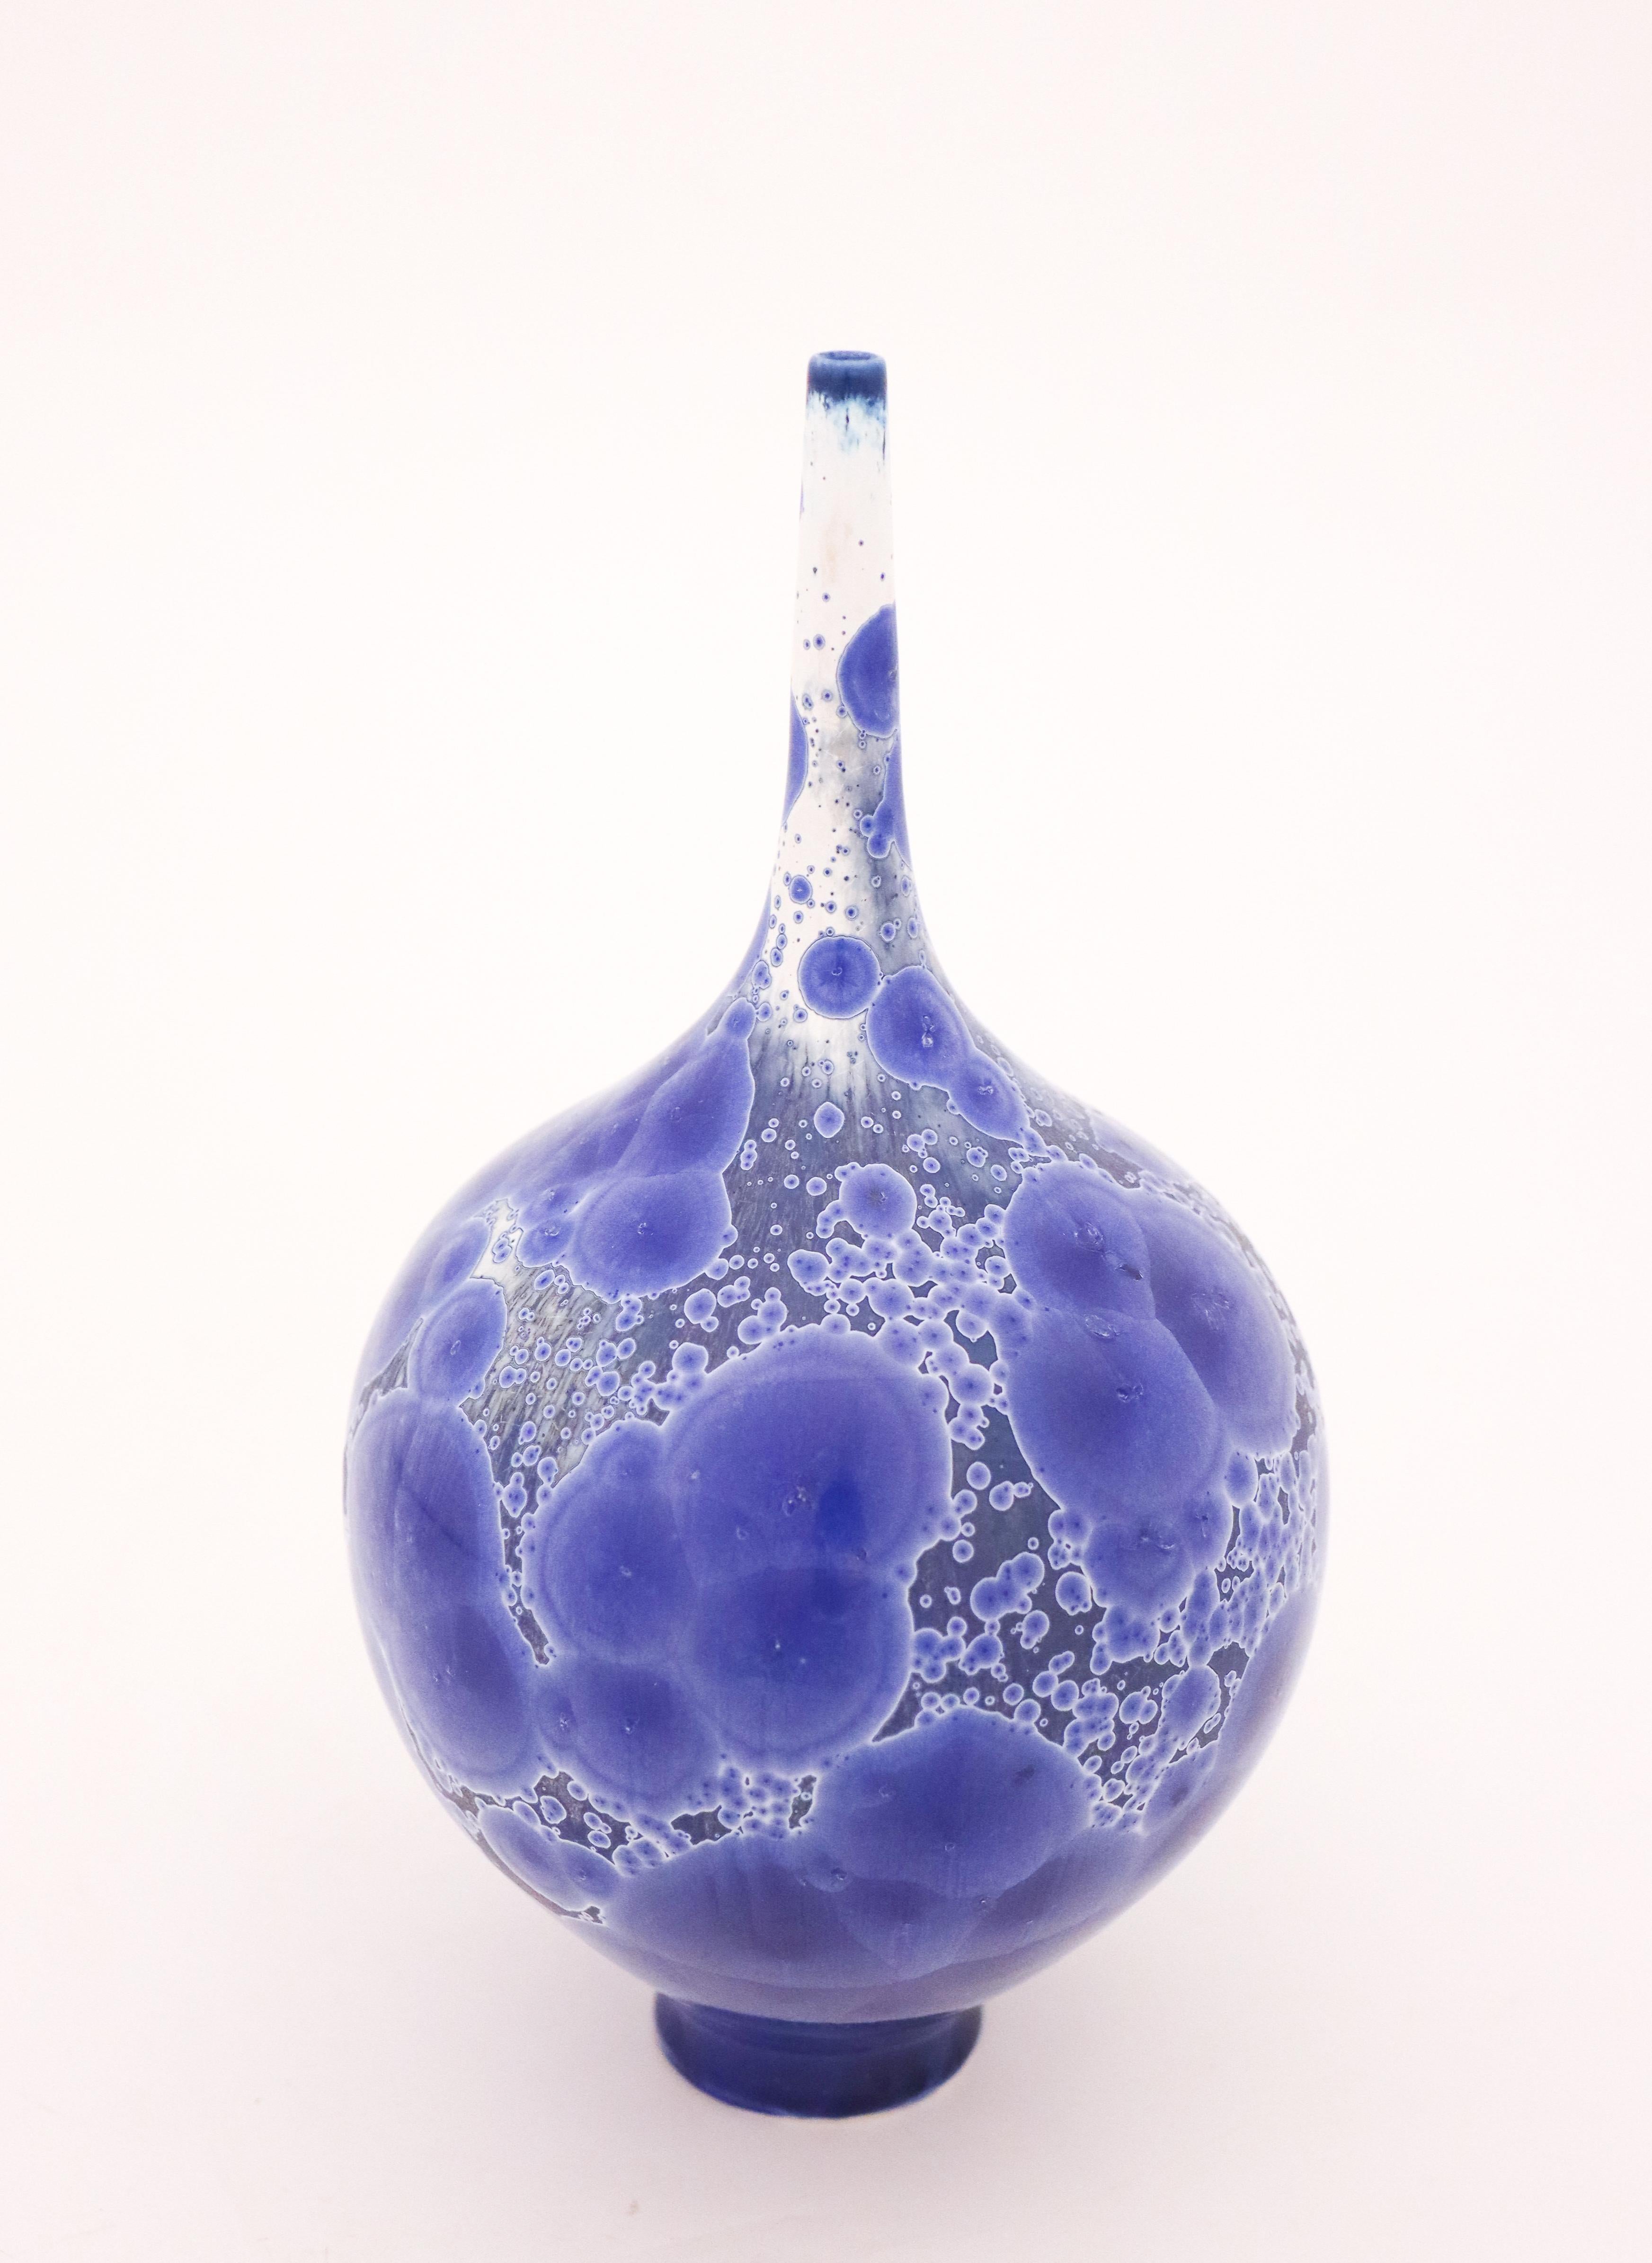 Vase by Isak Isaksson, Blue & White Glaze, Contemporary Swedish Ceramicist 1